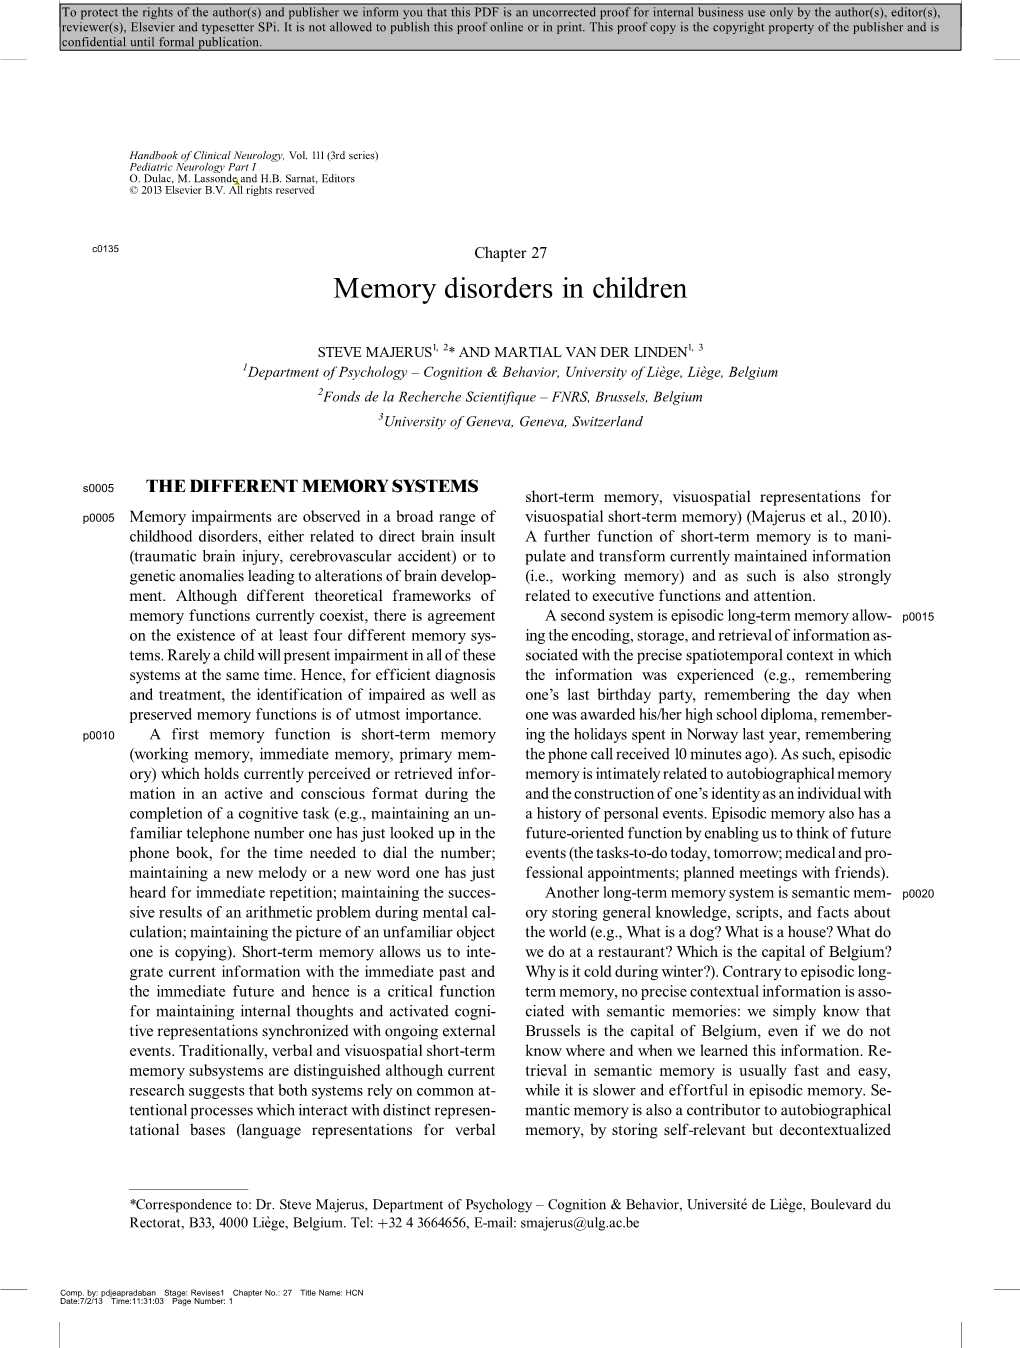 Memory Disorders in Children